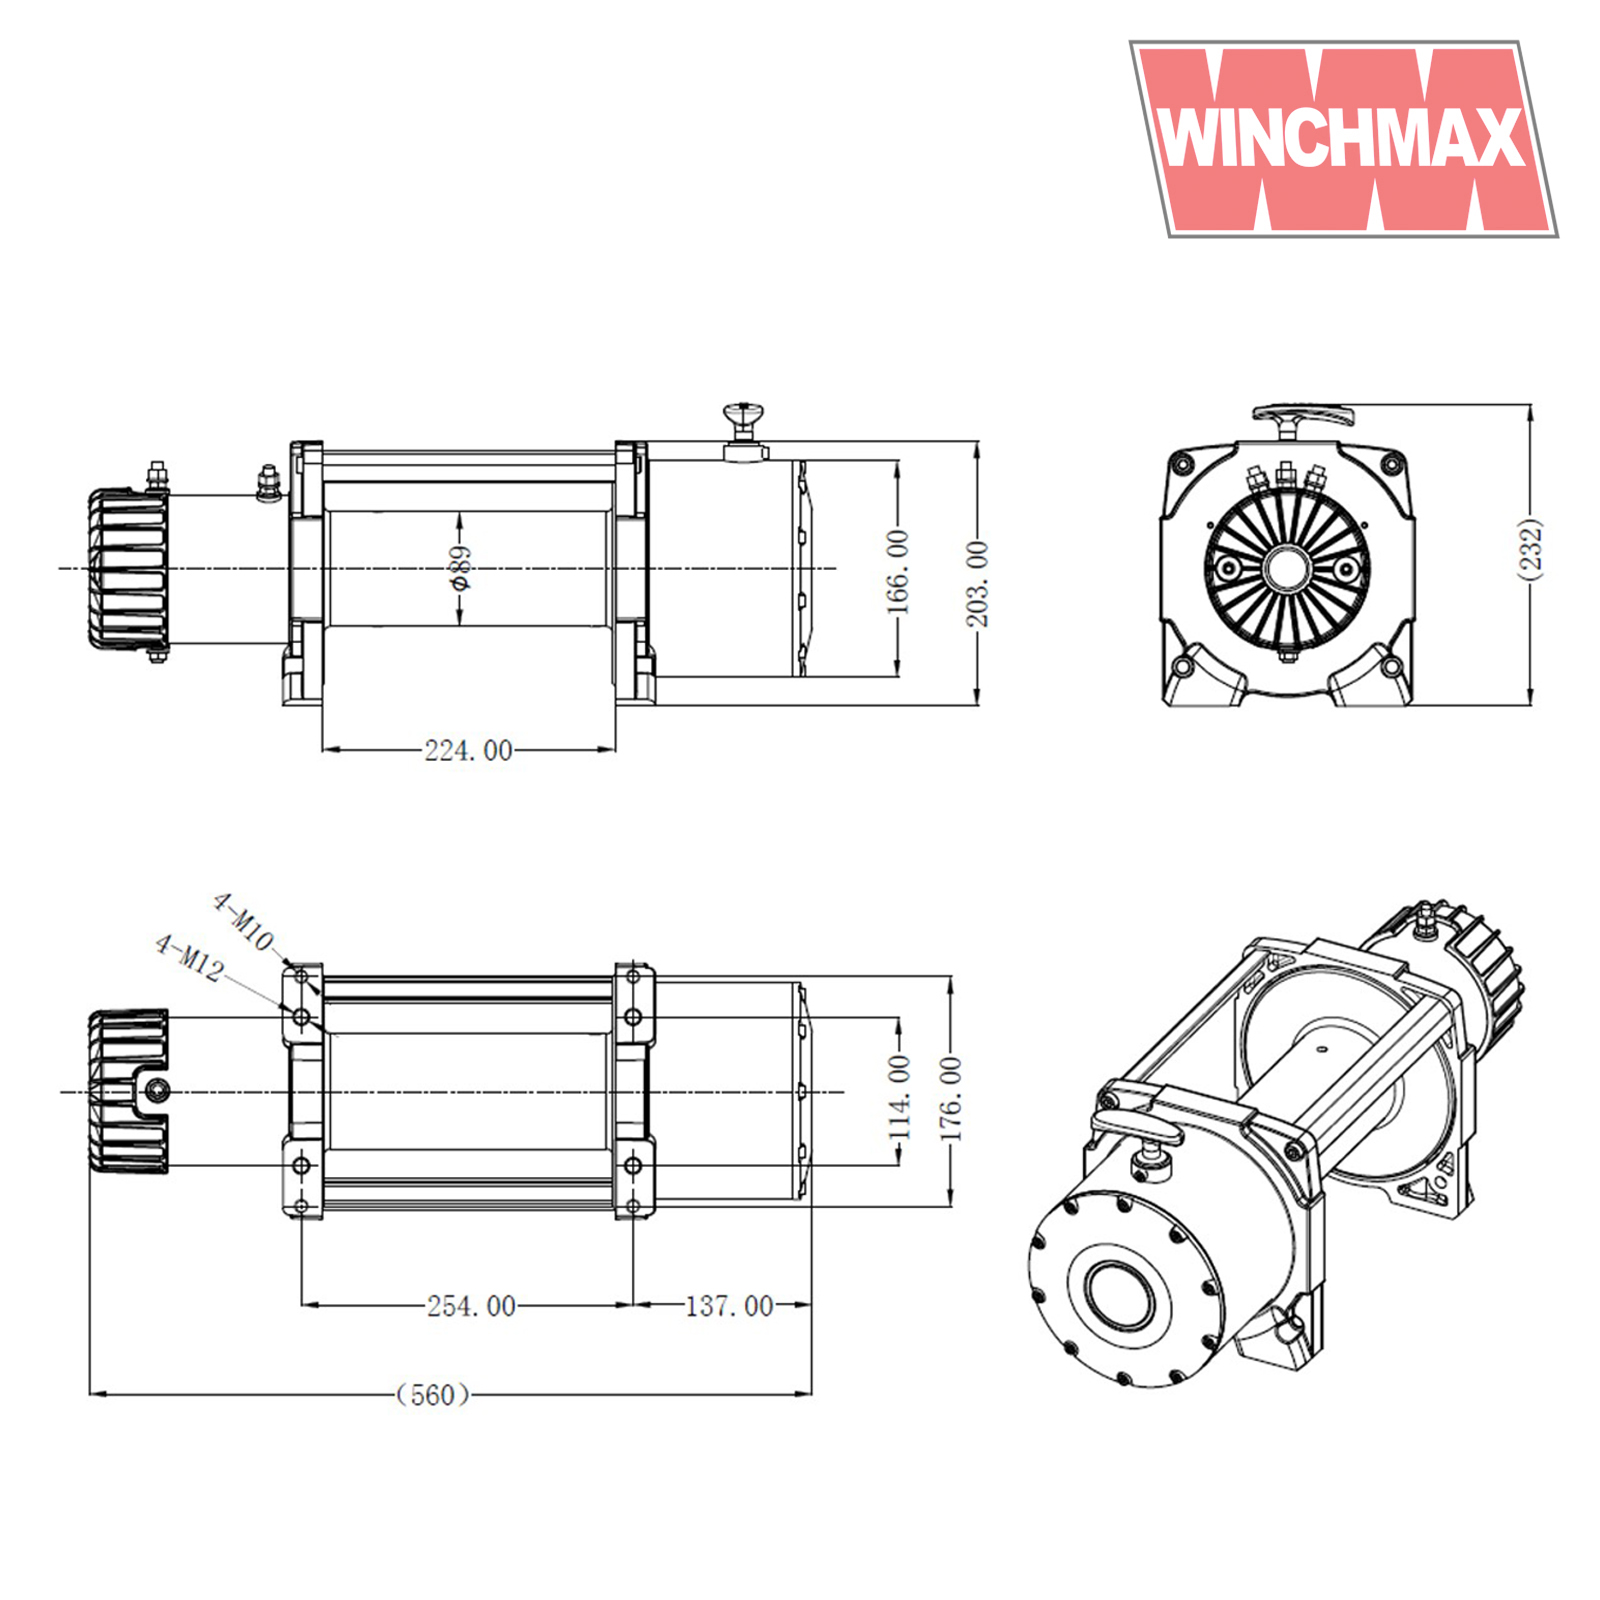 9,000lb (4,082kg) 12v Winch EN14492 Compliant. 24m x 9mm Steel Rope.  Mounting Plate & Battery Isolator. - Winchmax